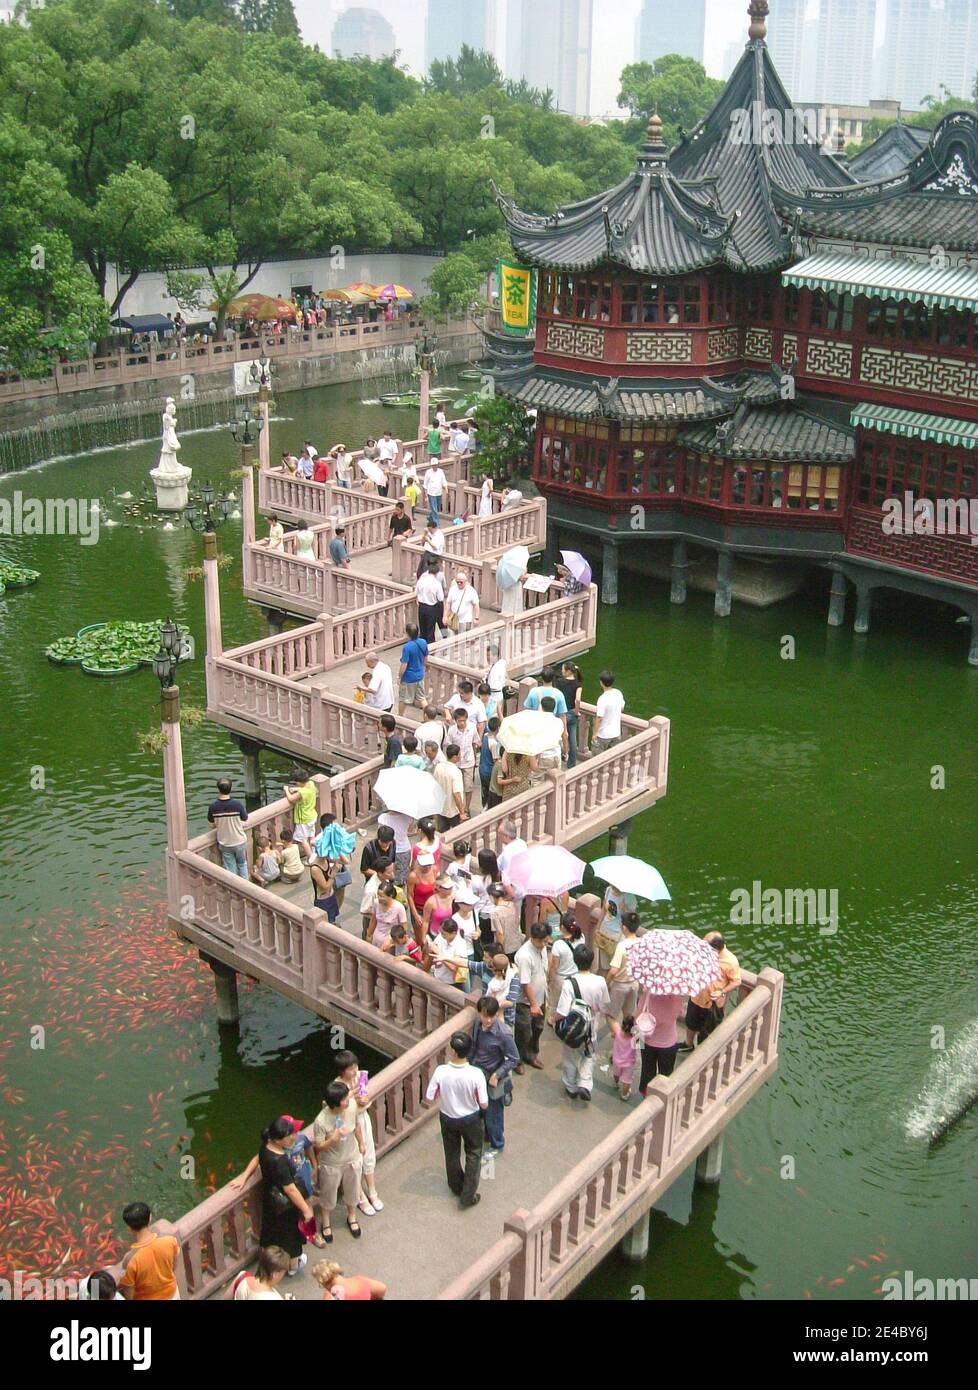 Il ponte a nove zigzag e Teahhouse, il giardino Yu (Yuyuan), Huangpu Qu, Shanghai, Repubblica popolare Cinese Foto Stock